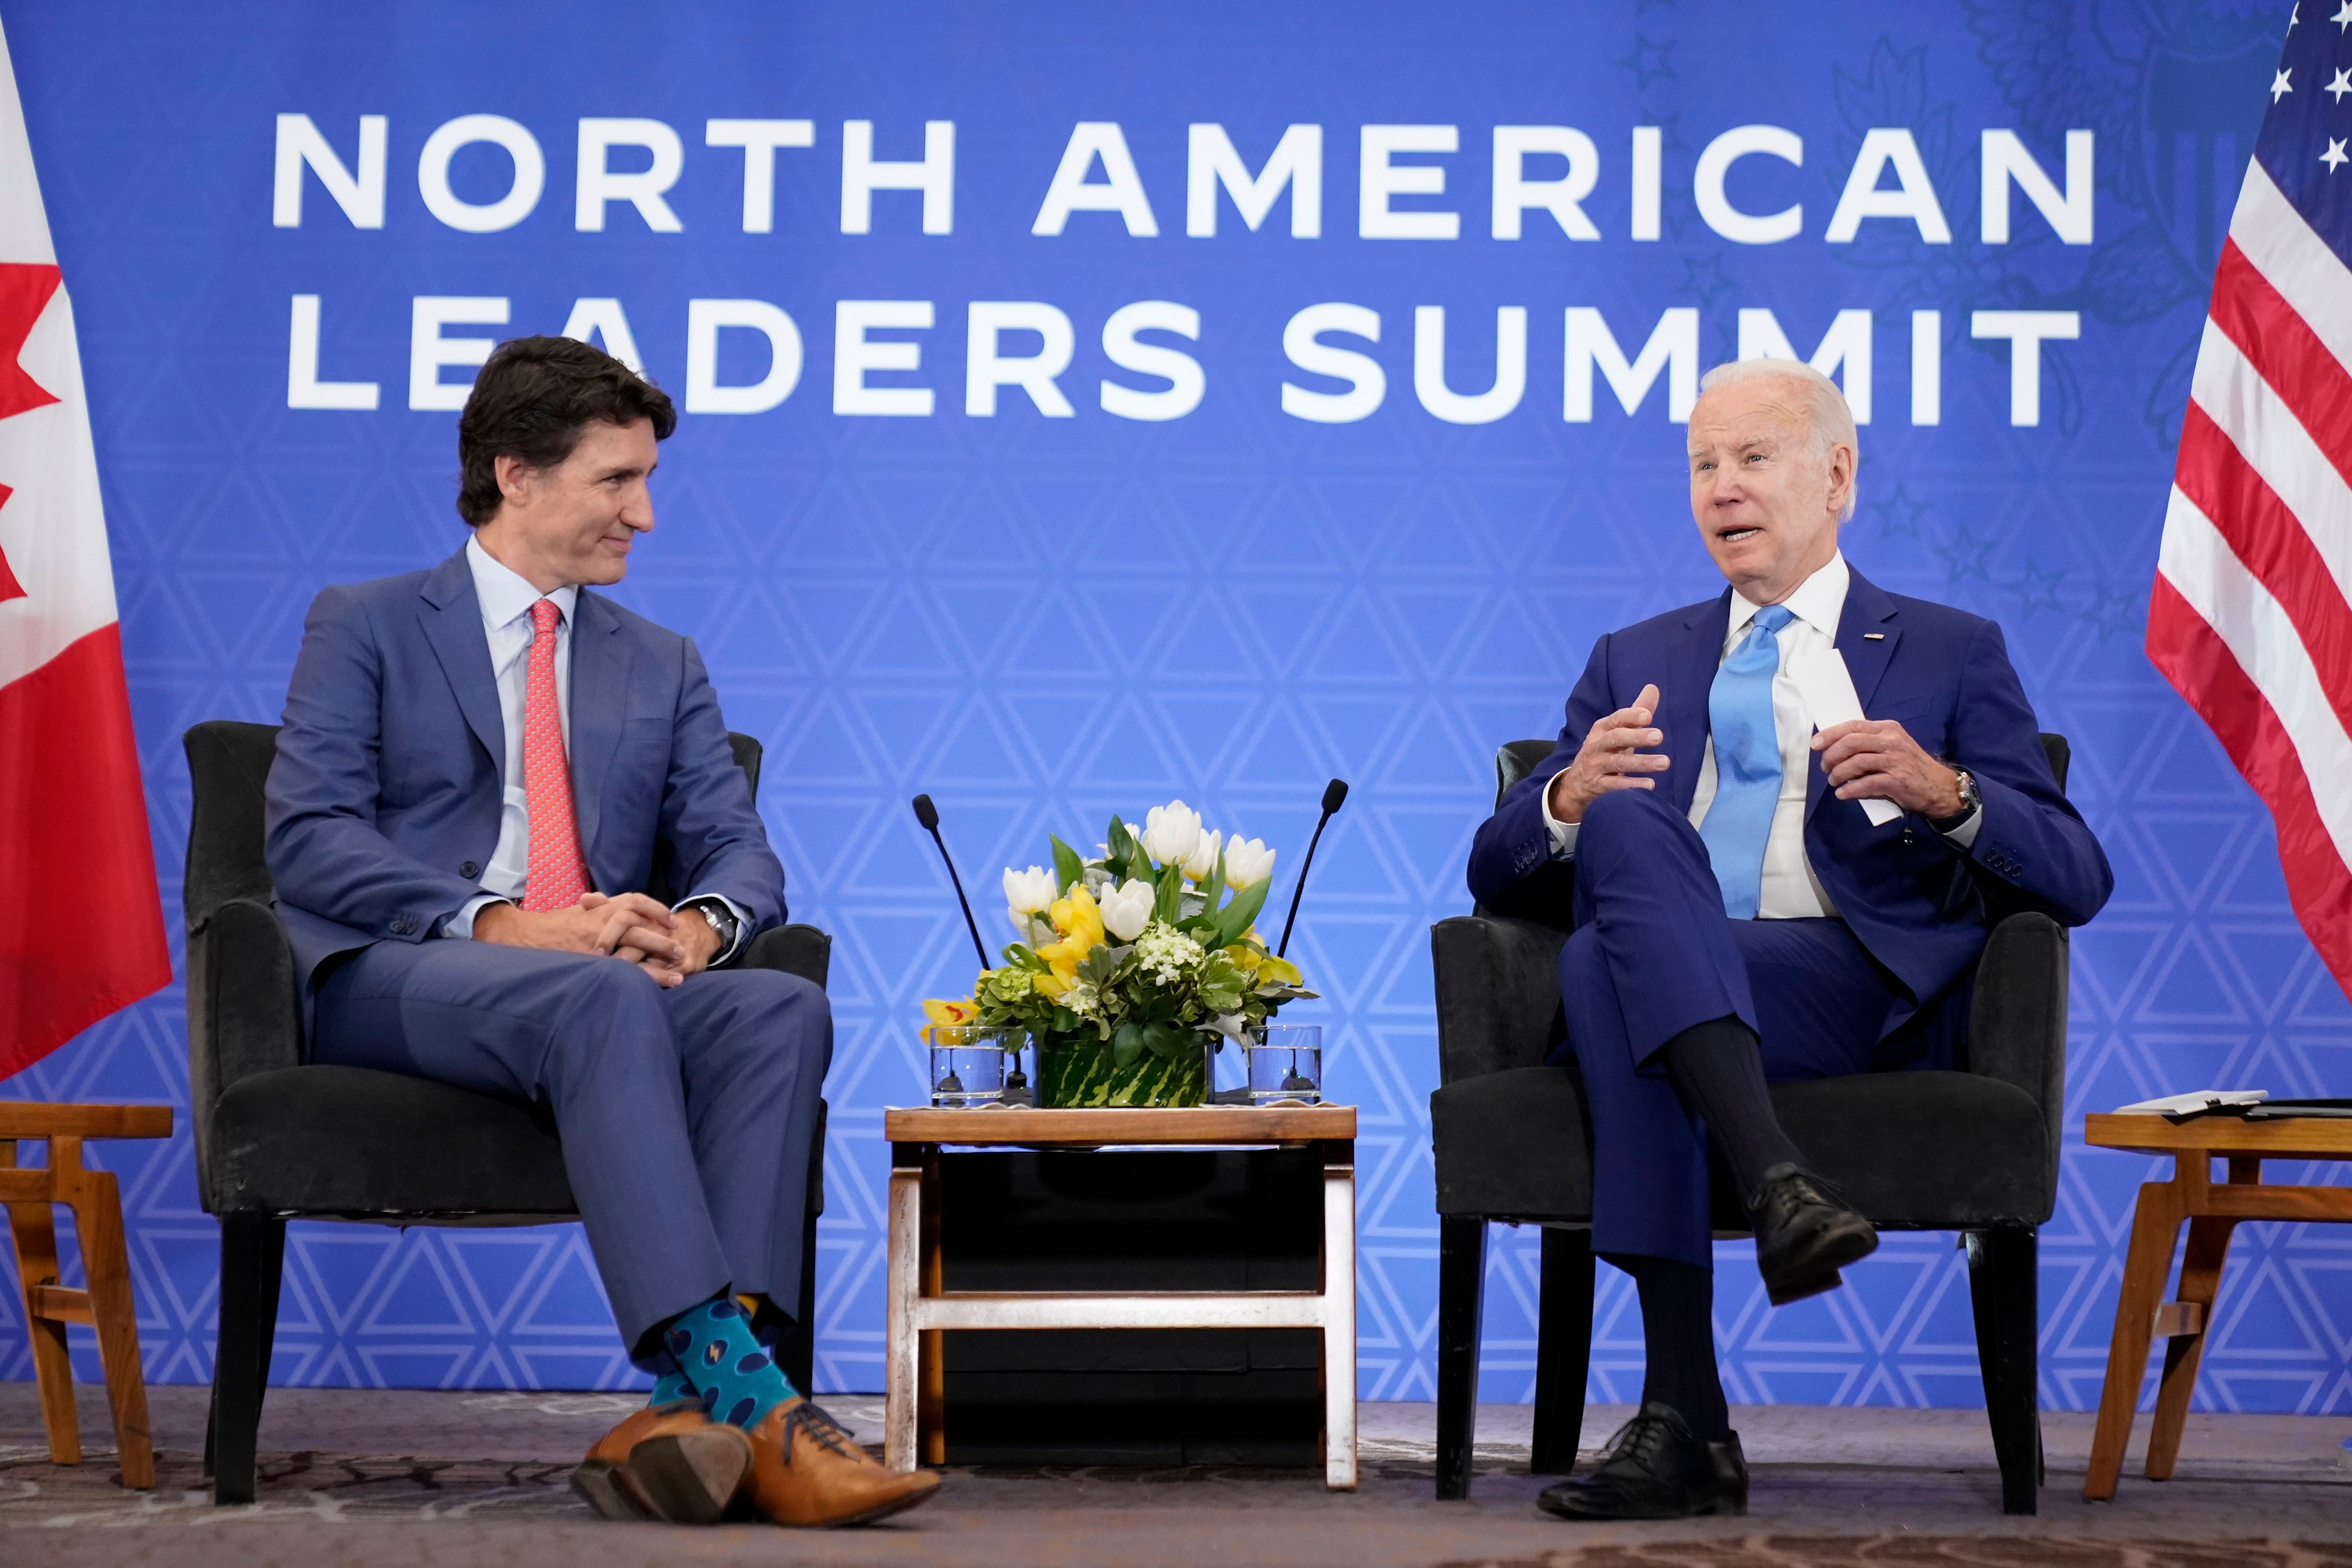 Joe Biden with Canadian prime minister Justin Trudeau